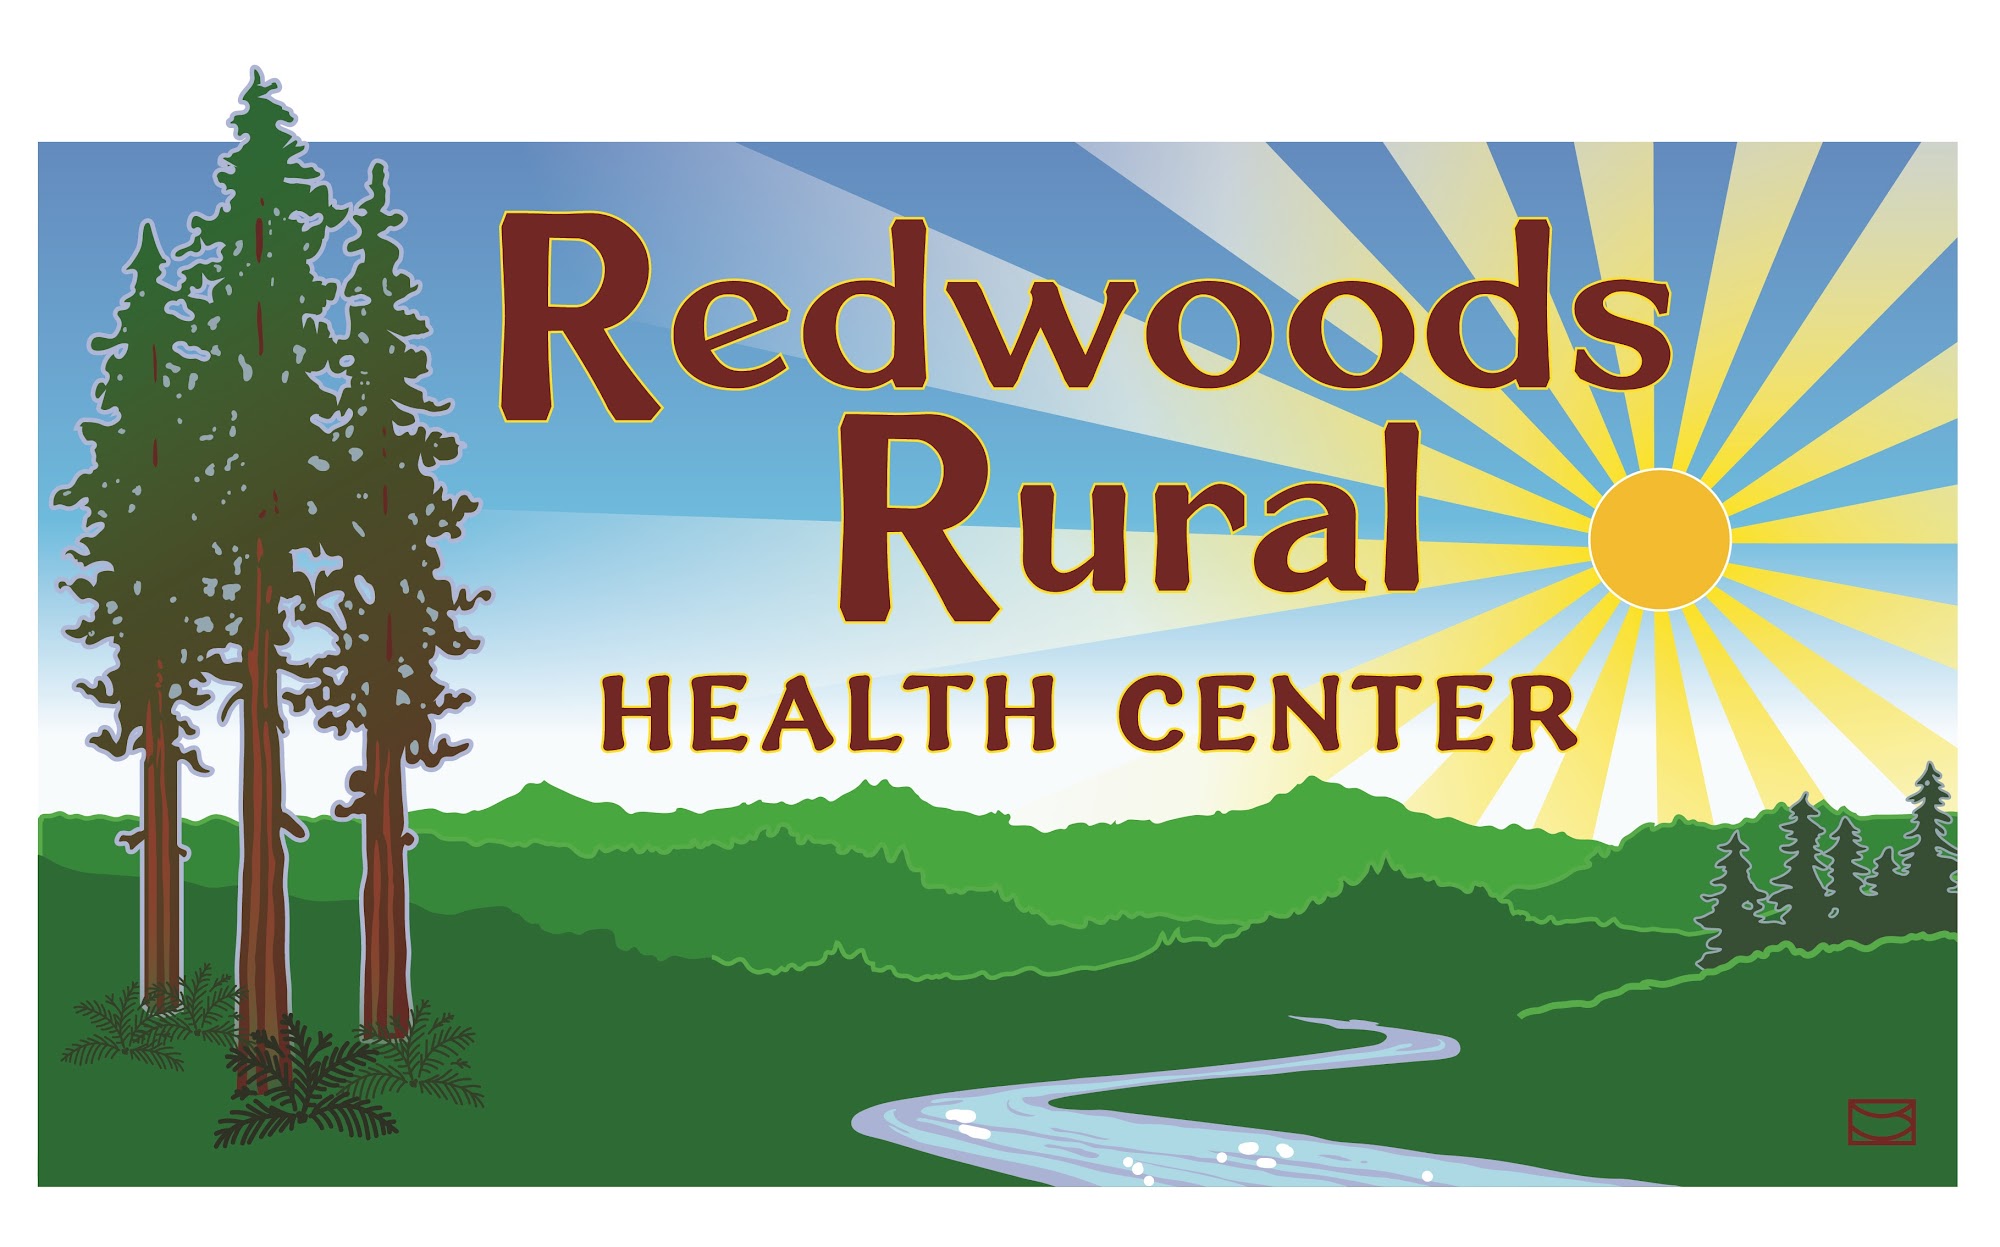 Redwoods Rural Health Center 101 West Coast Rd # B, Redway California 95560